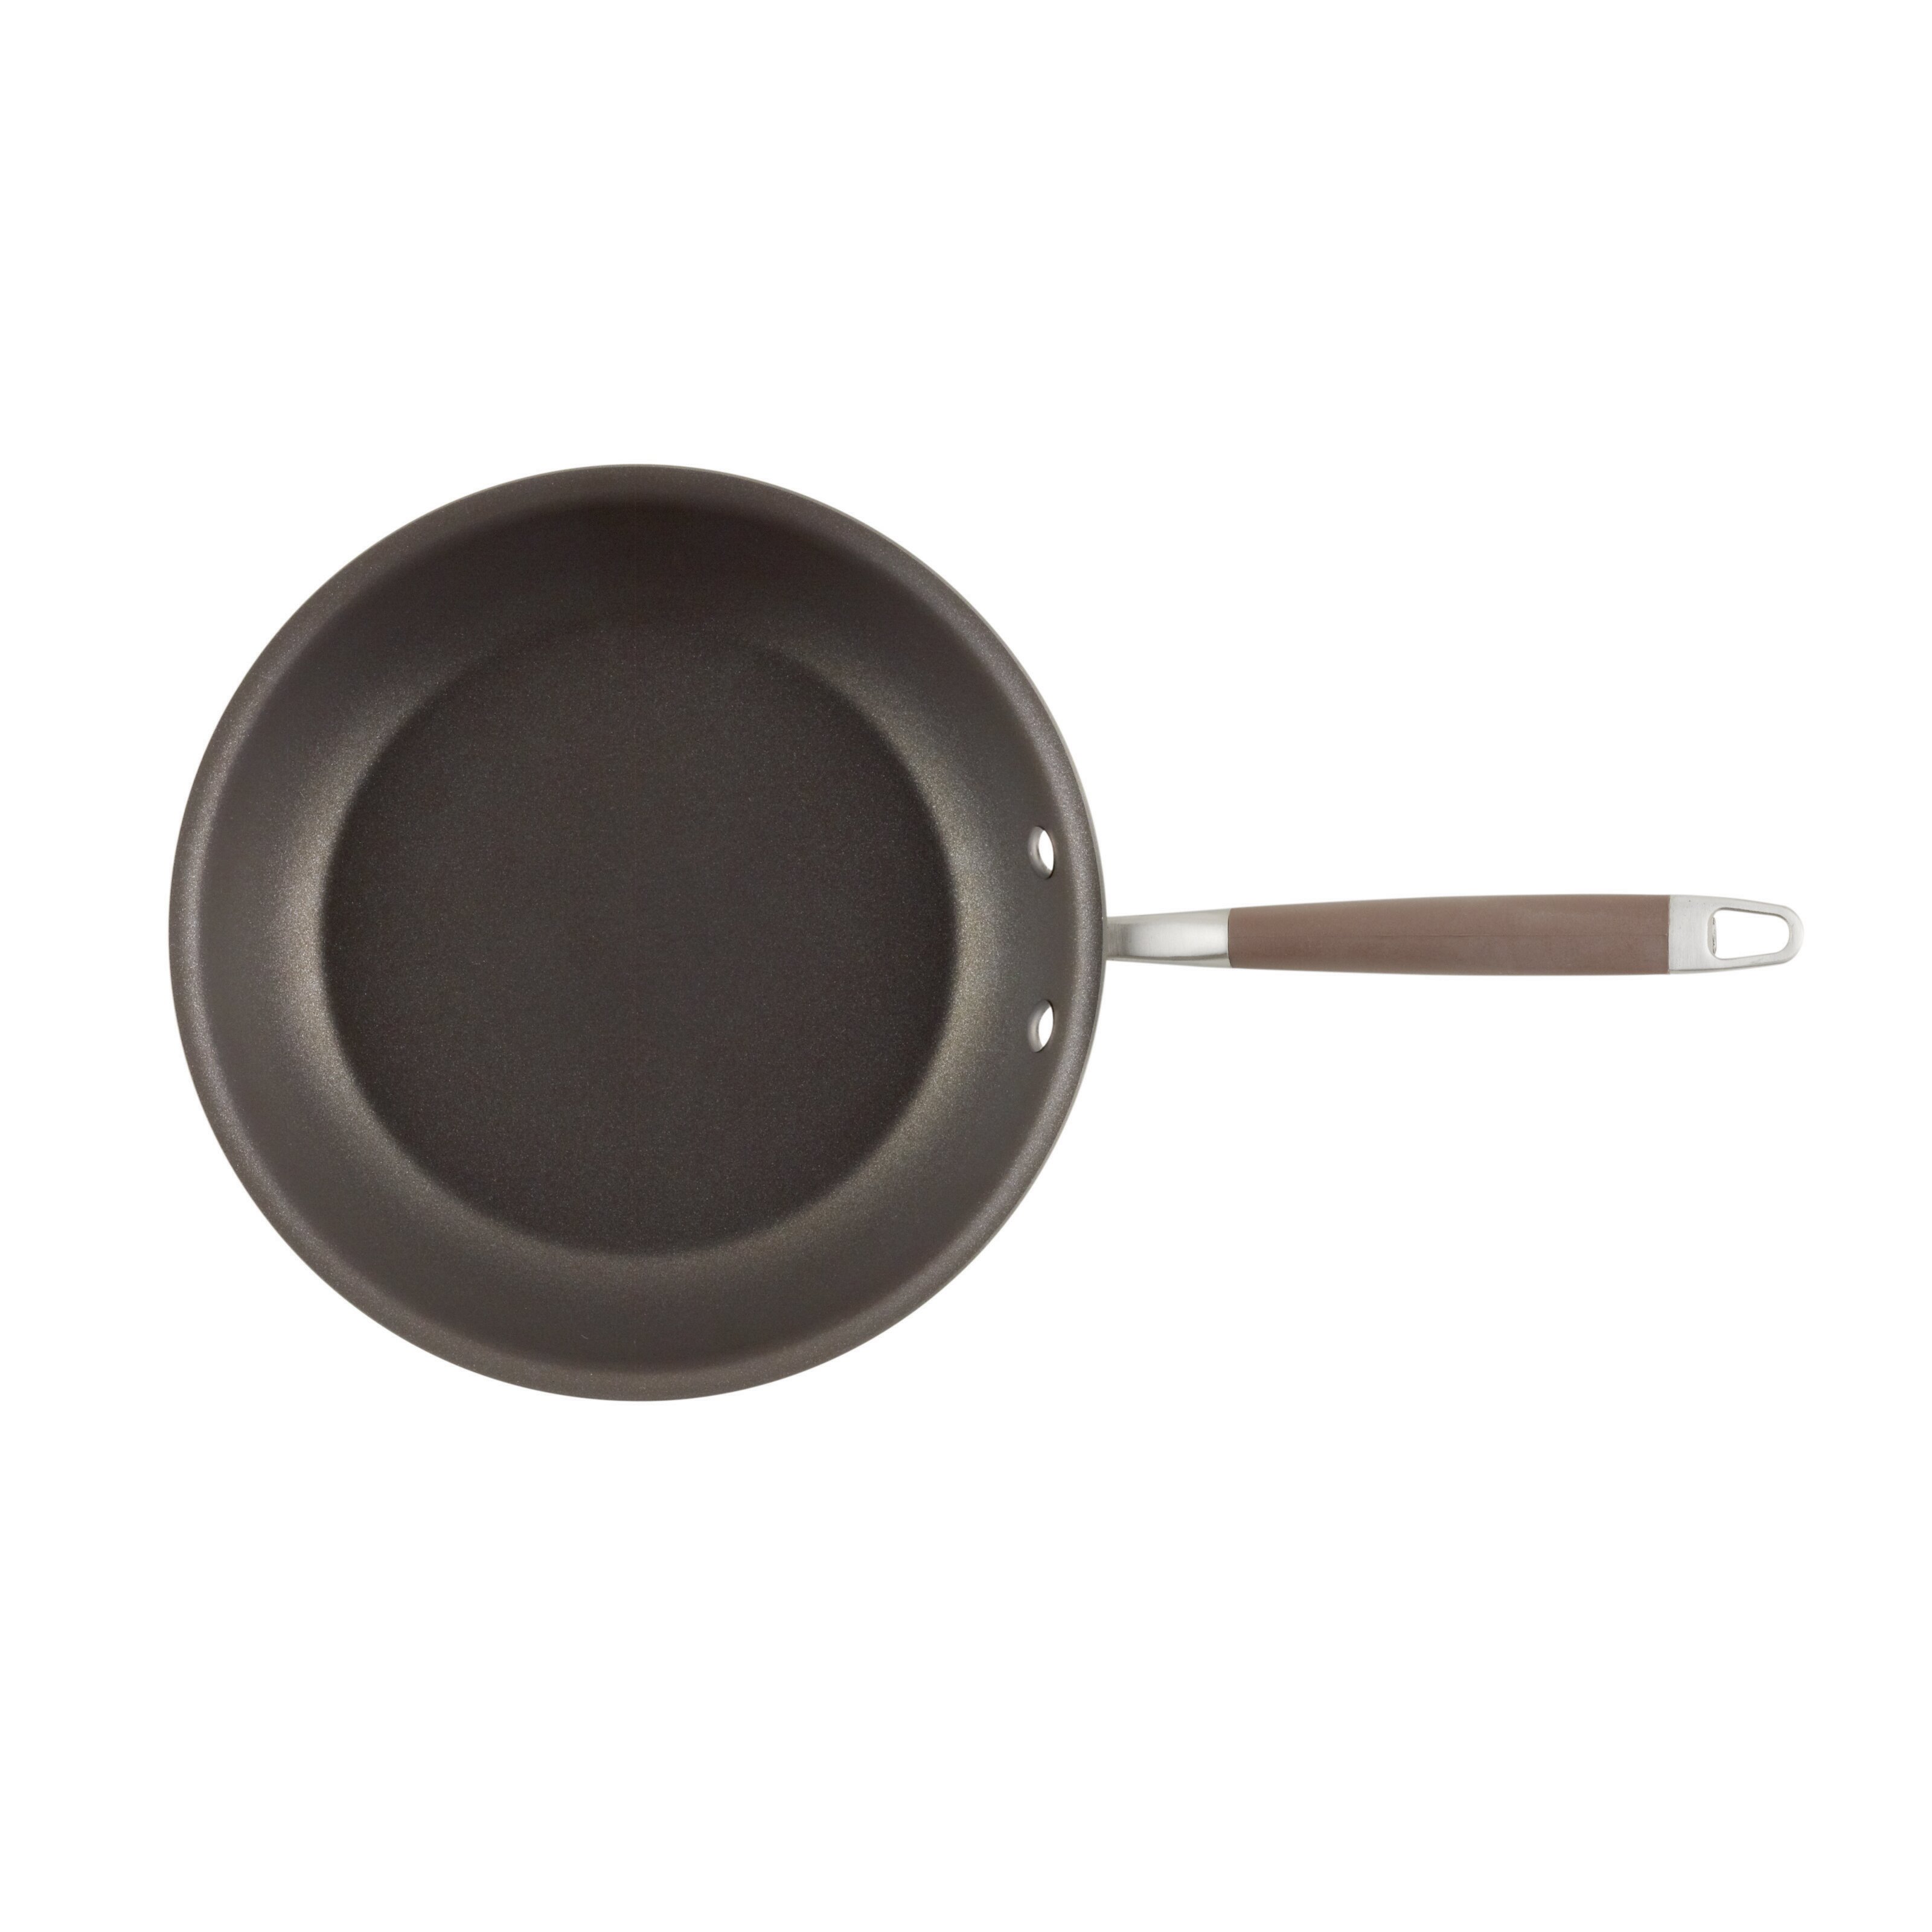  Anolon 82243 Advanced Hard Anodized Nonstick Frying Pan / Fry  Pan / Hard Anodized Skillet - 8 Inch, Brown: Analon Advanced Bronze: Home &  Kitchen